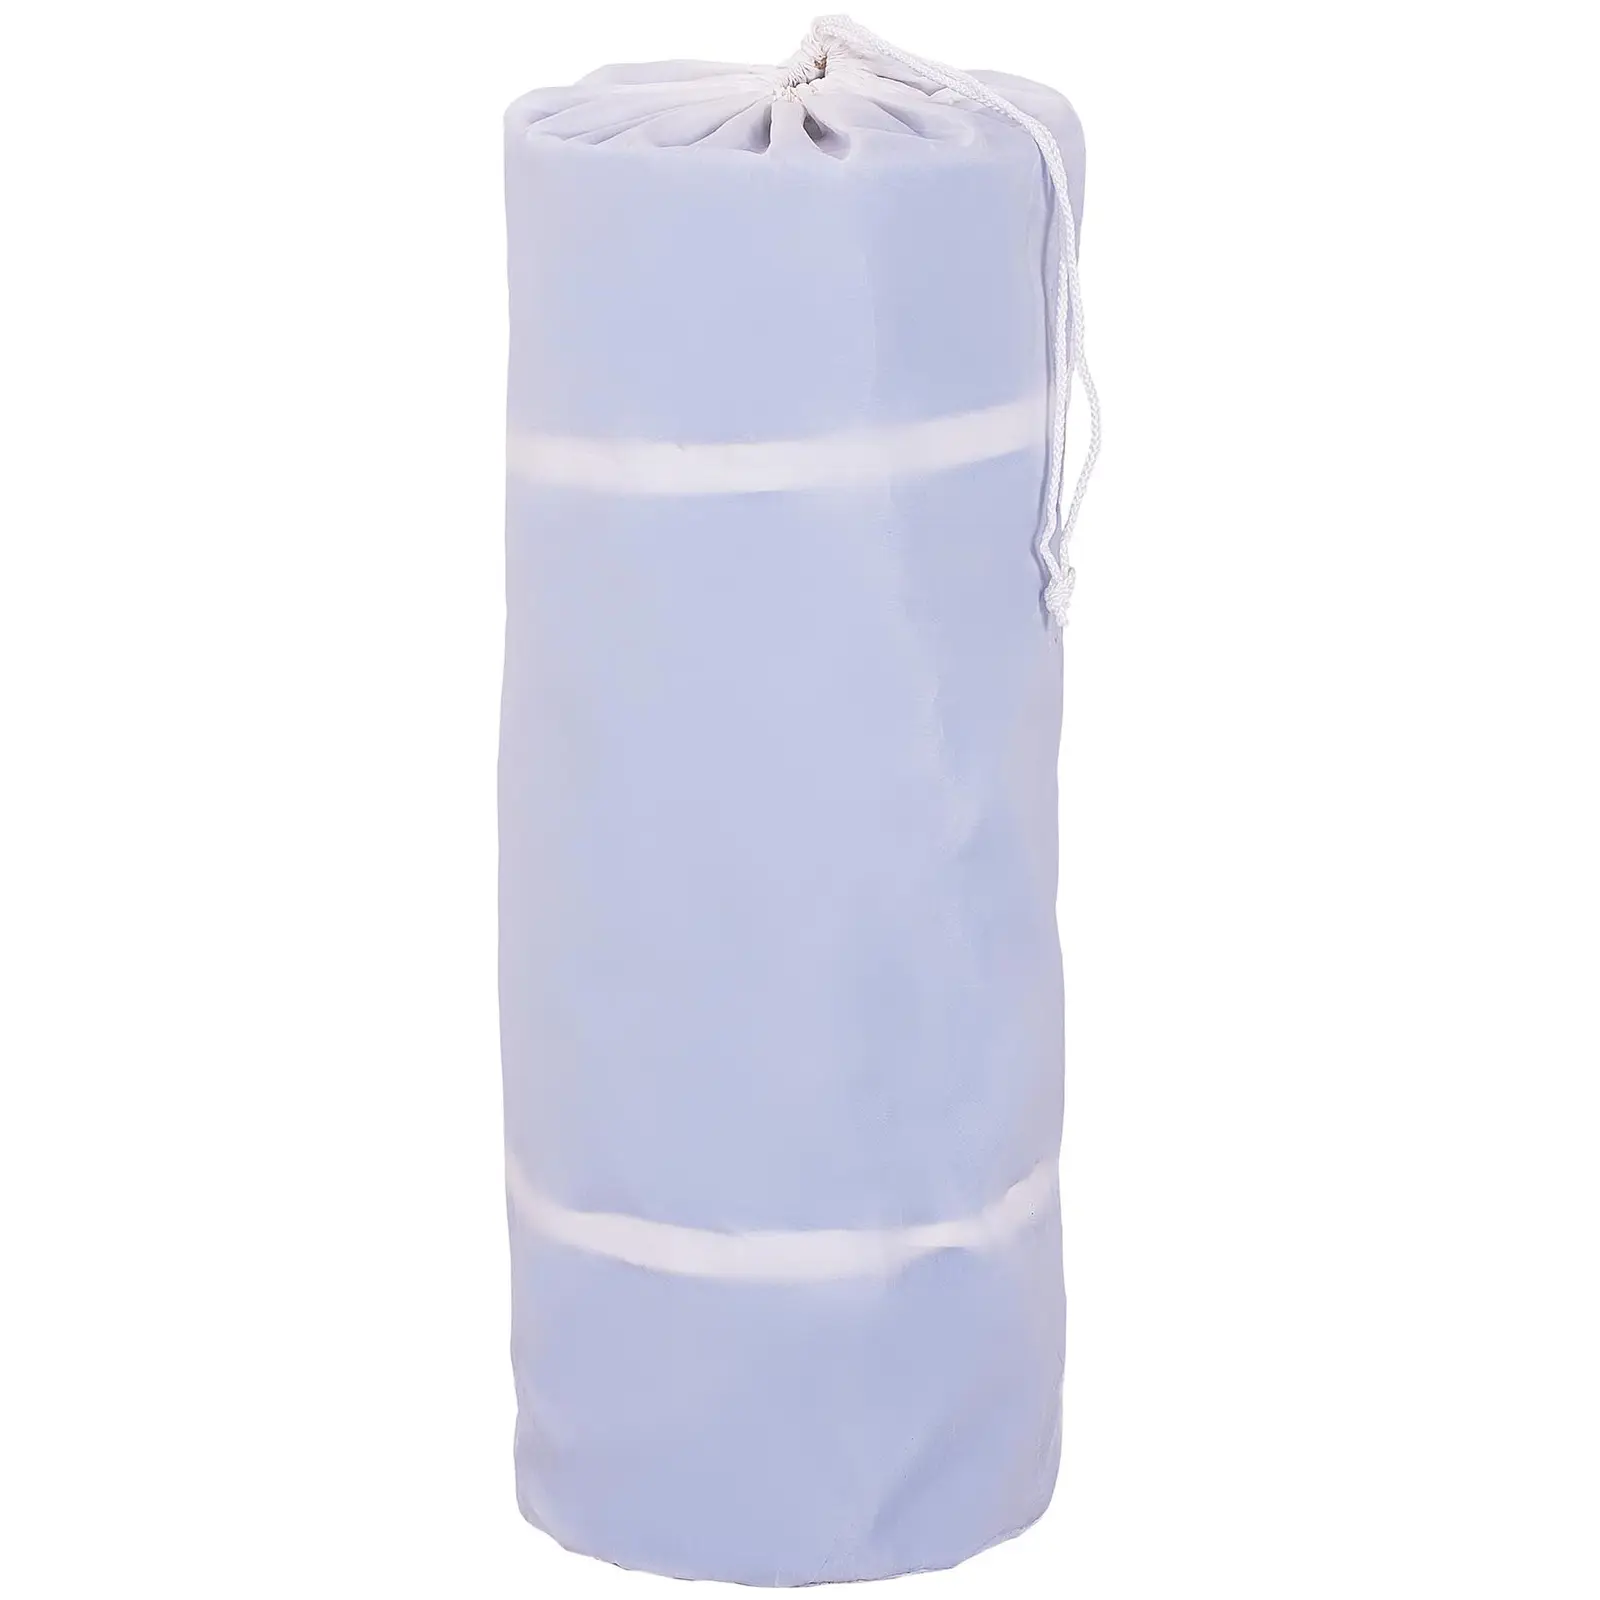 Uppblåsbar gymnastikmatta - 300 x 200 x 20 cm - blå och vit